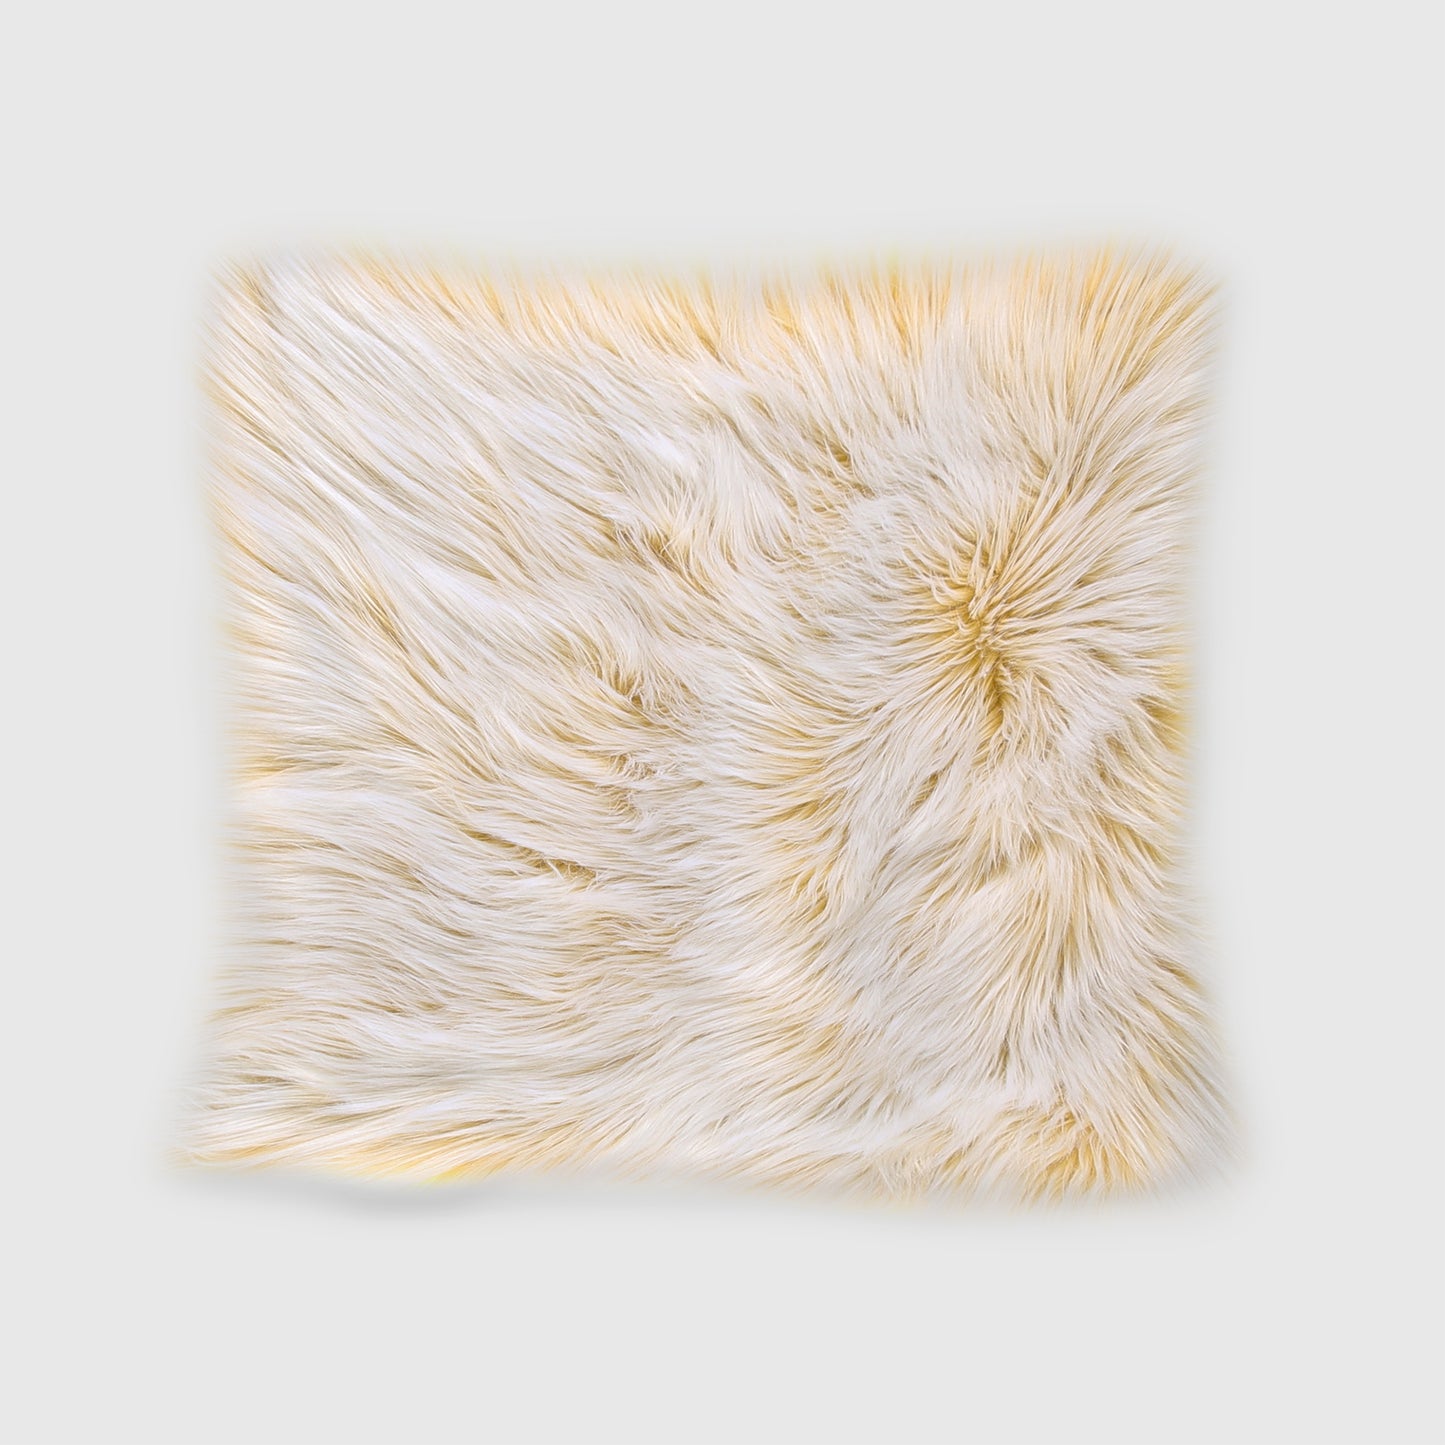 The Mood | Harris Faux Fur 20"x20" Pillow, Pumpkin Pie